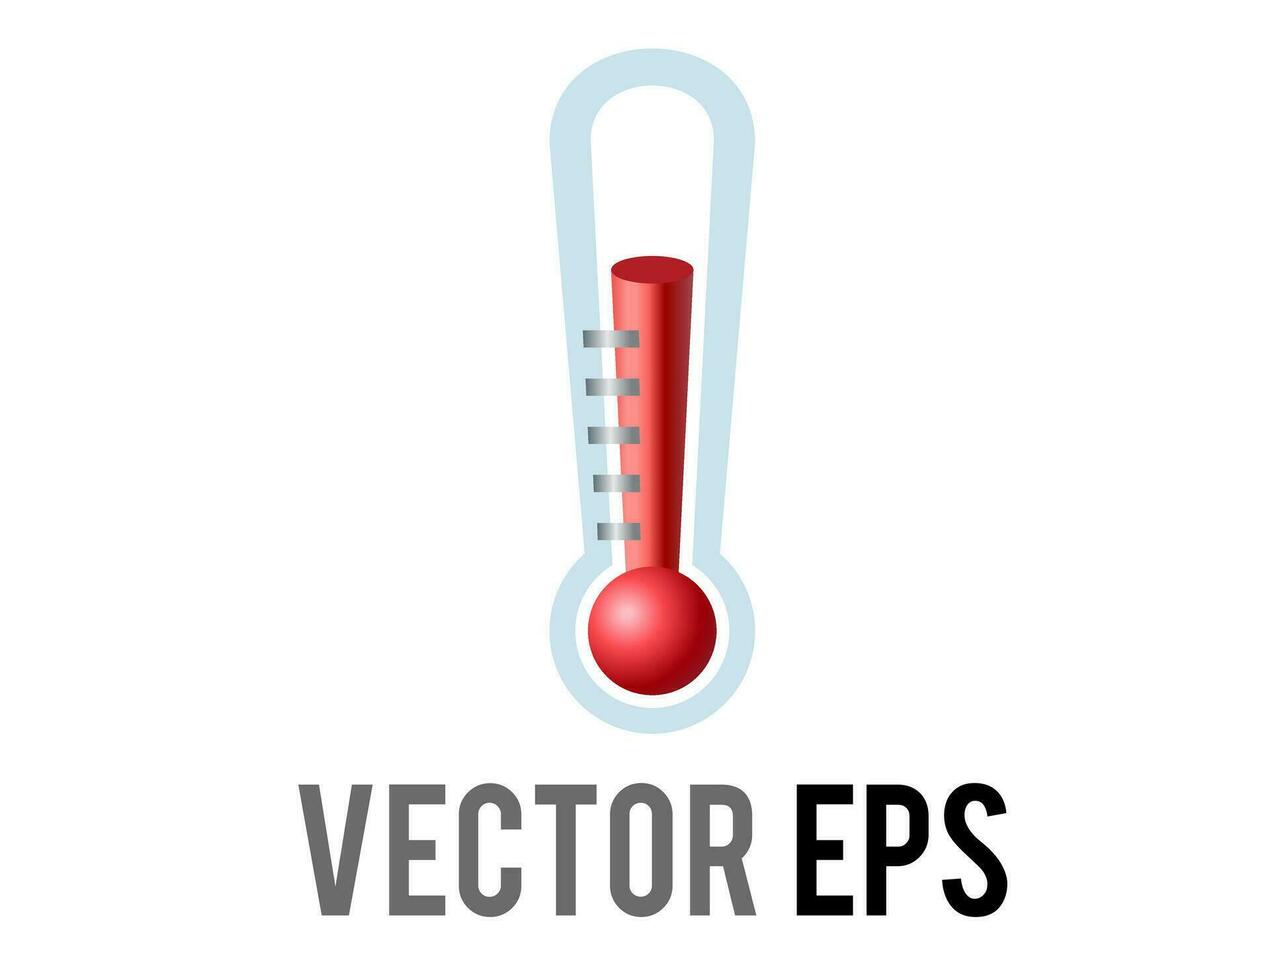 Vector liquid in glass thermometer icon with red liquid risen to measure temperature